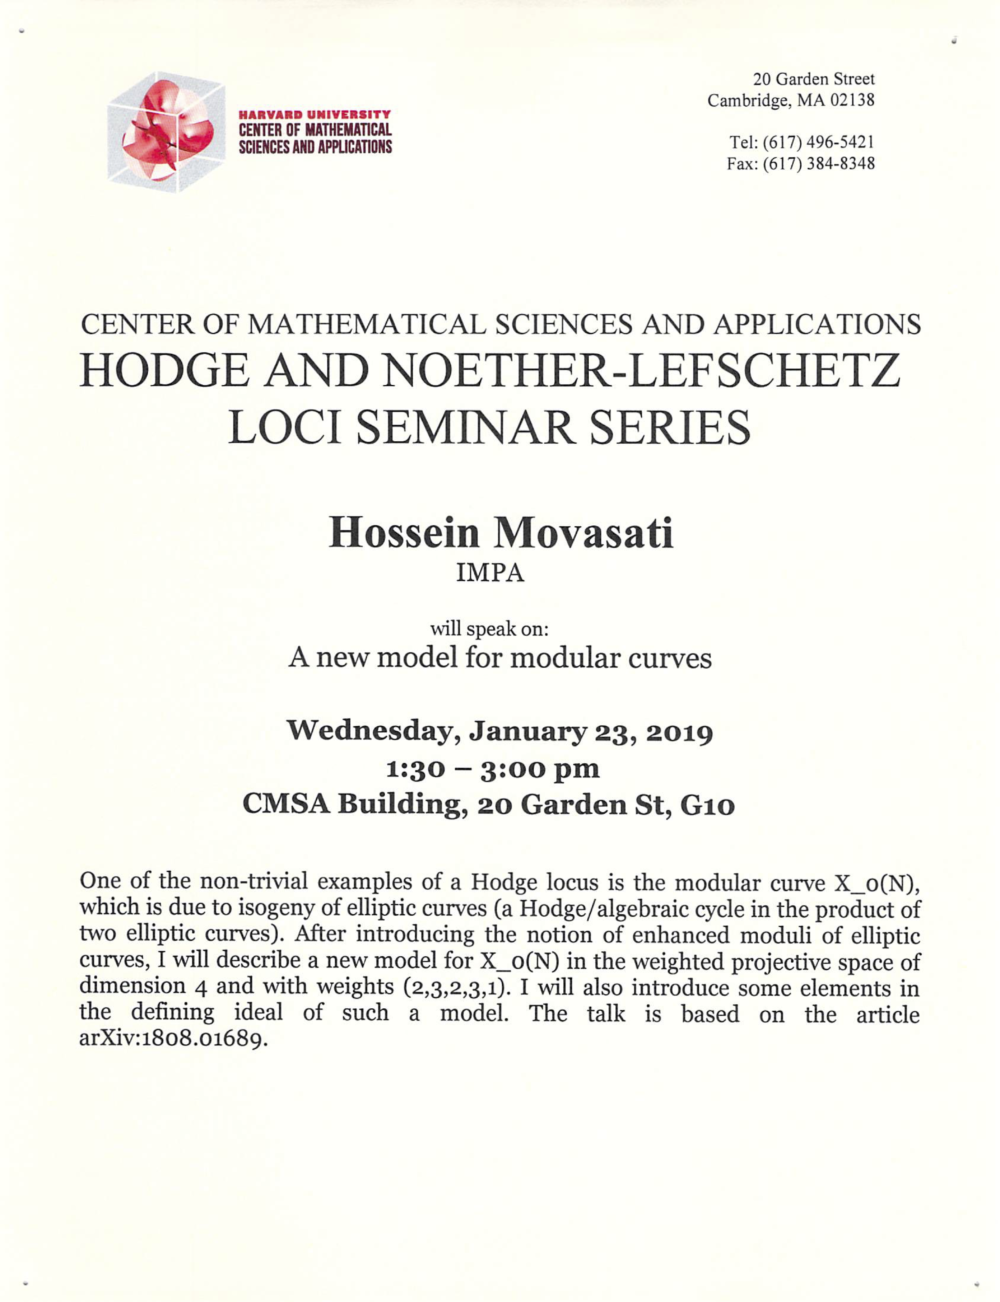 1/23/2019 Hodge Seminar